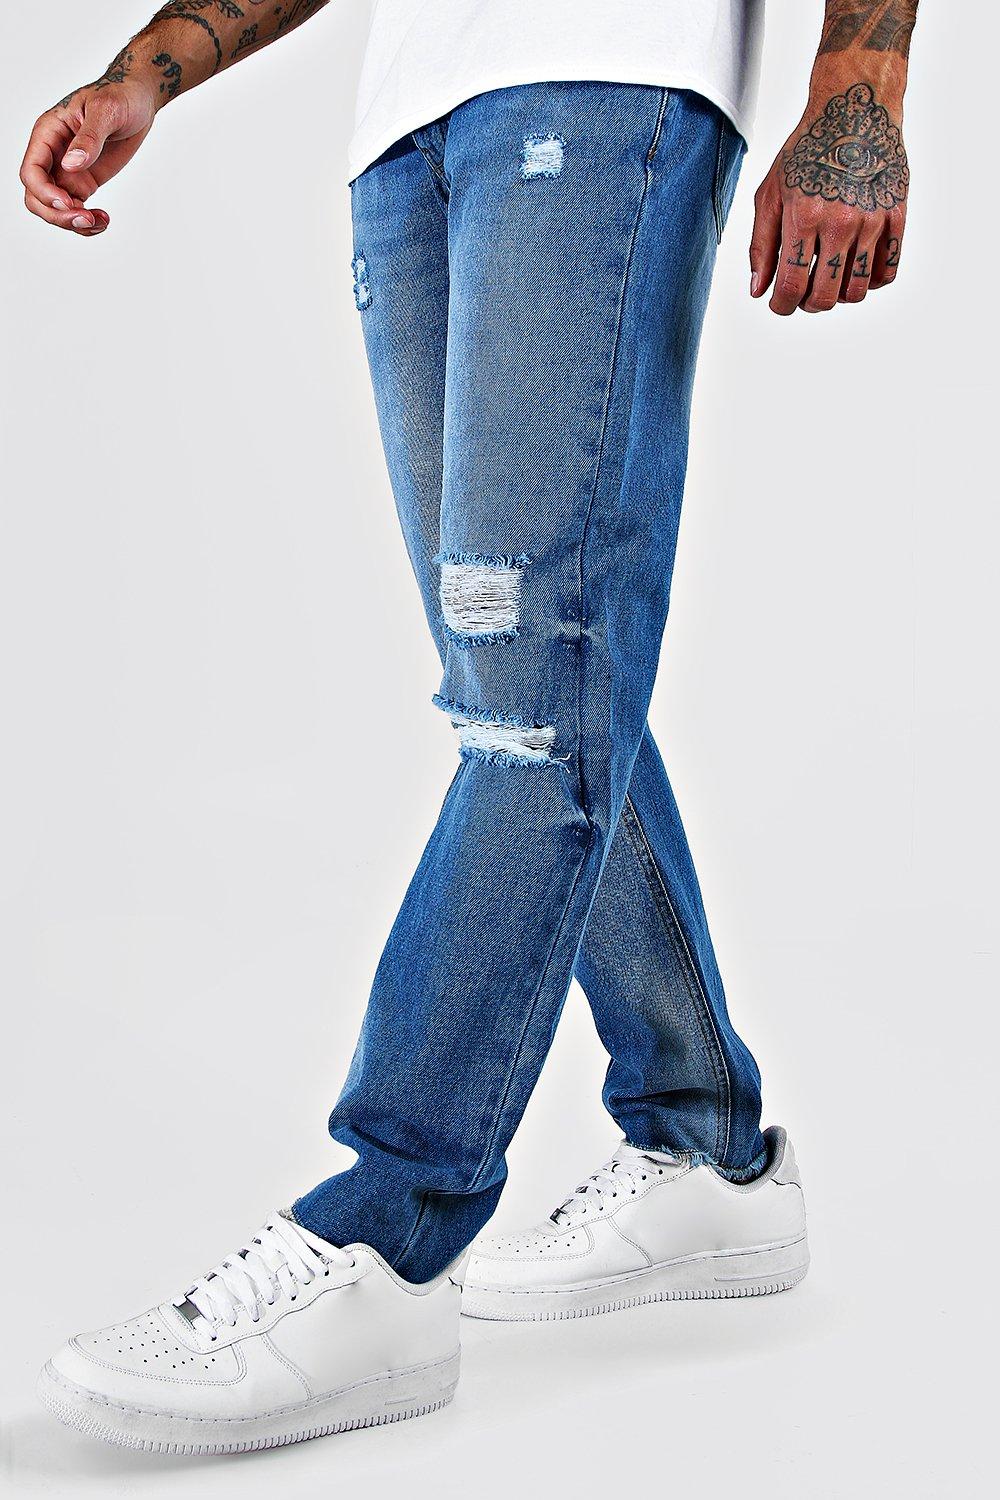 skinny fit distressed jeans